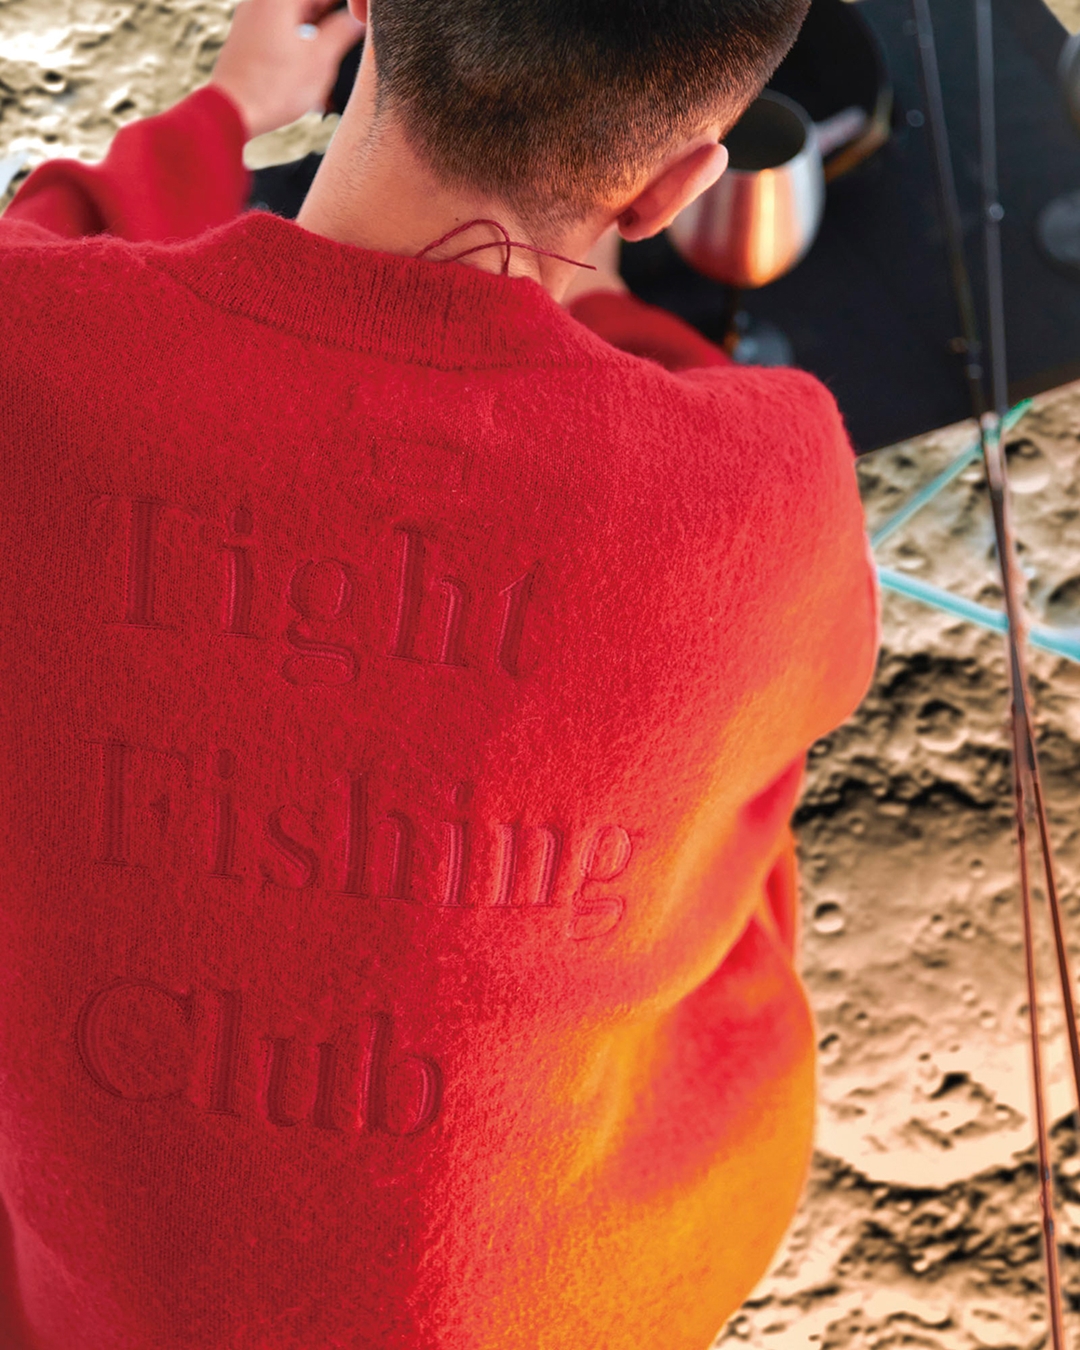 TIGHTBOOTH × Chaos Fishing Club カプセルコレクション「TIGHT FISHING CLUB」が11/6 発売 (タイトブース カオスフィッシングクラブ)